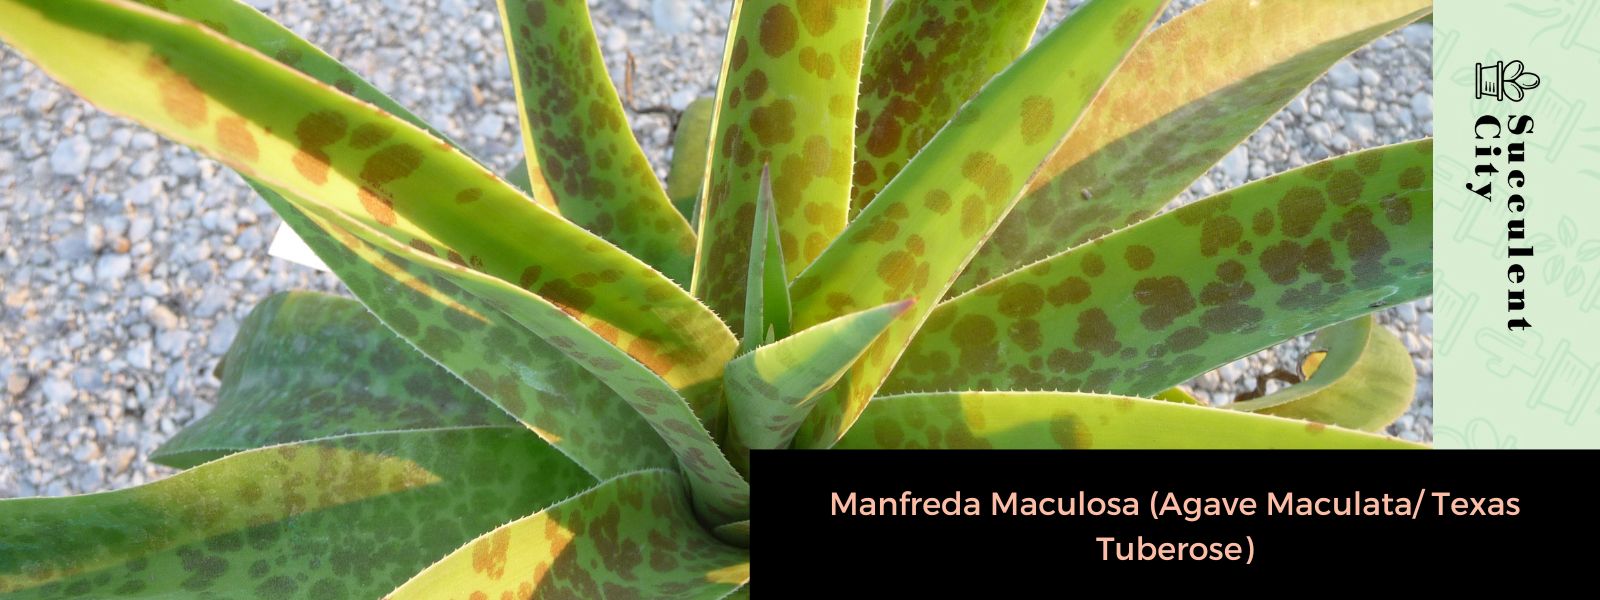 Manfreda Maculosa (Agave Maculata/Texas Tuberose)